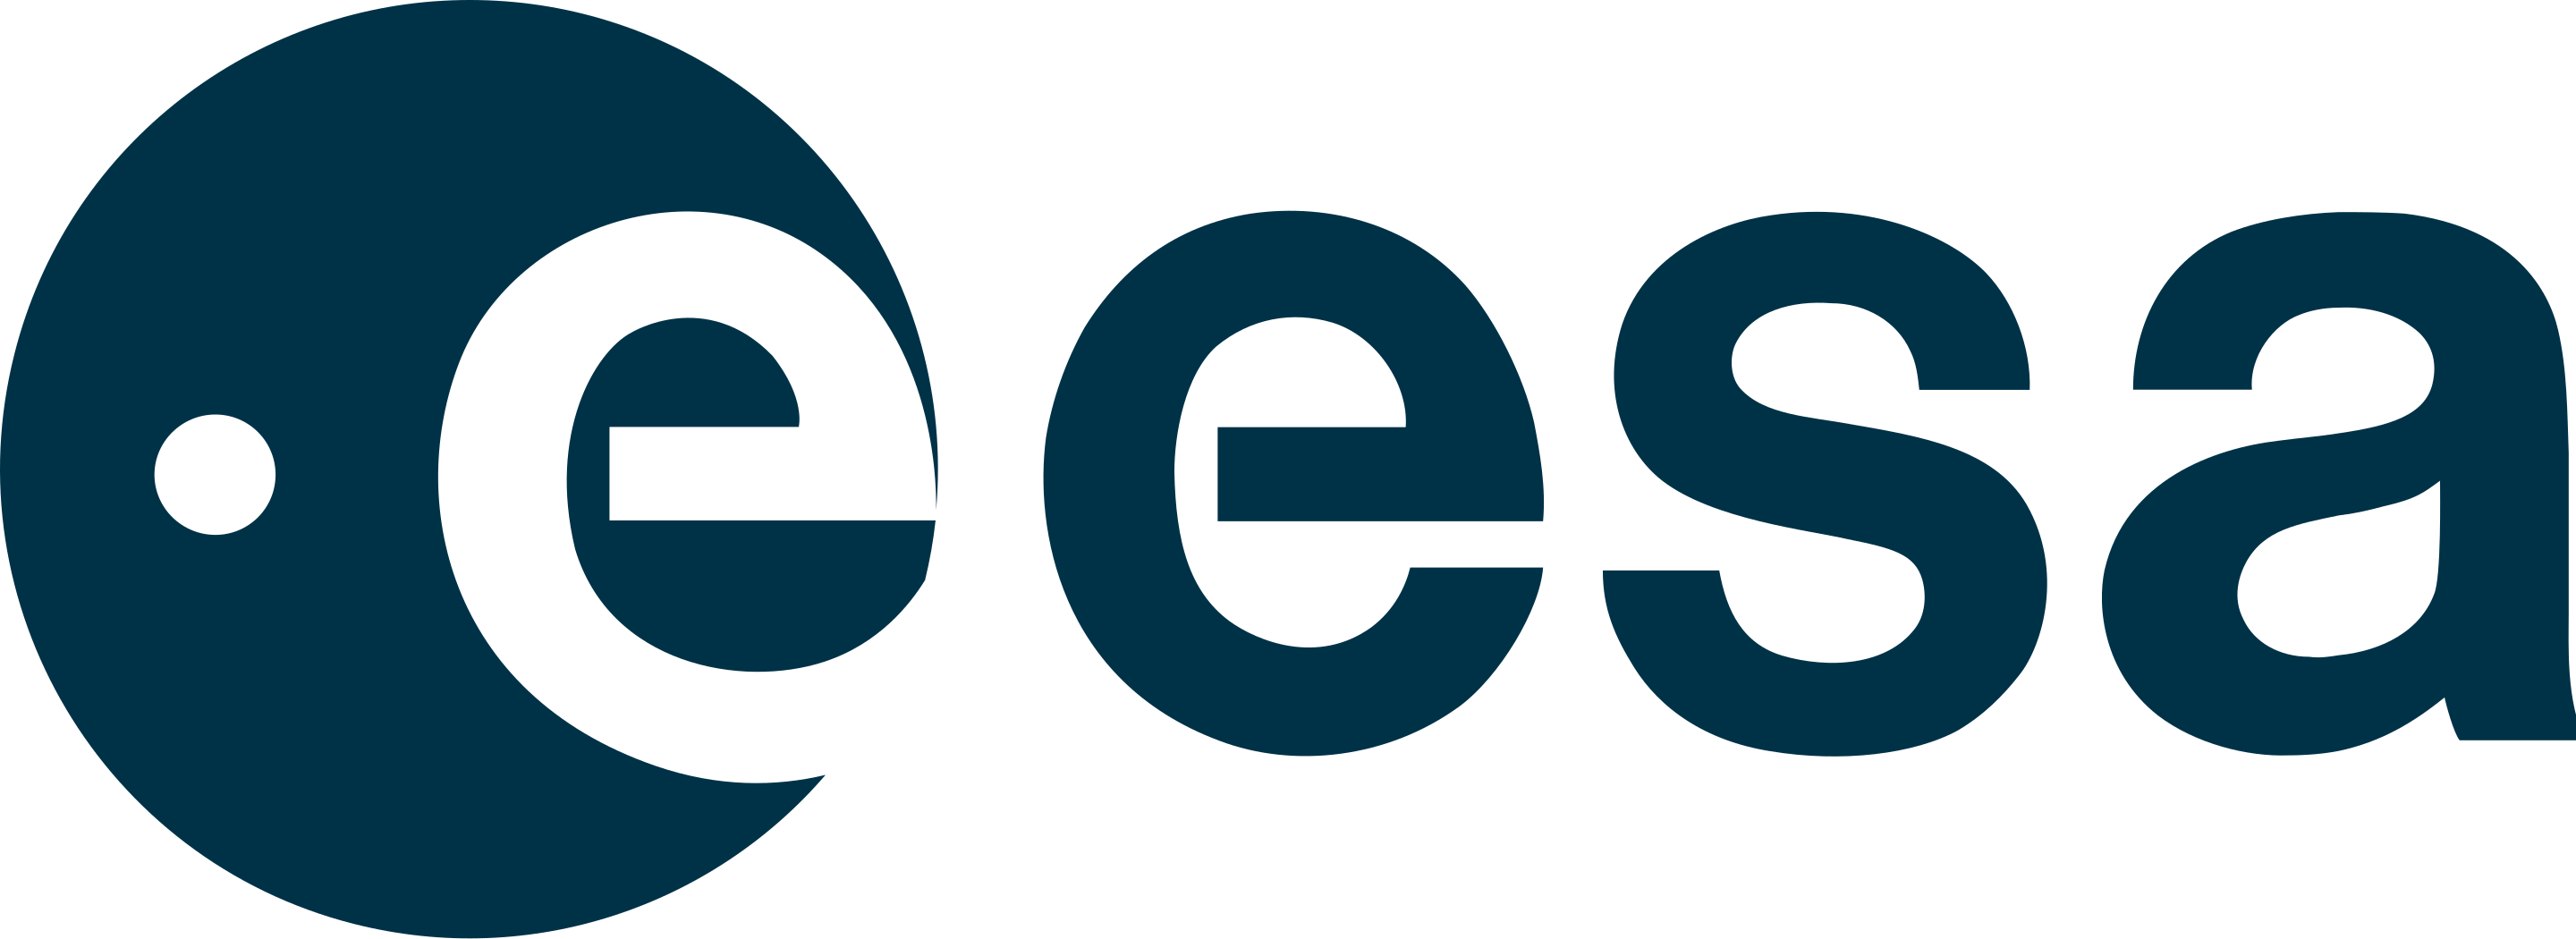 _images/ESA_logo.png